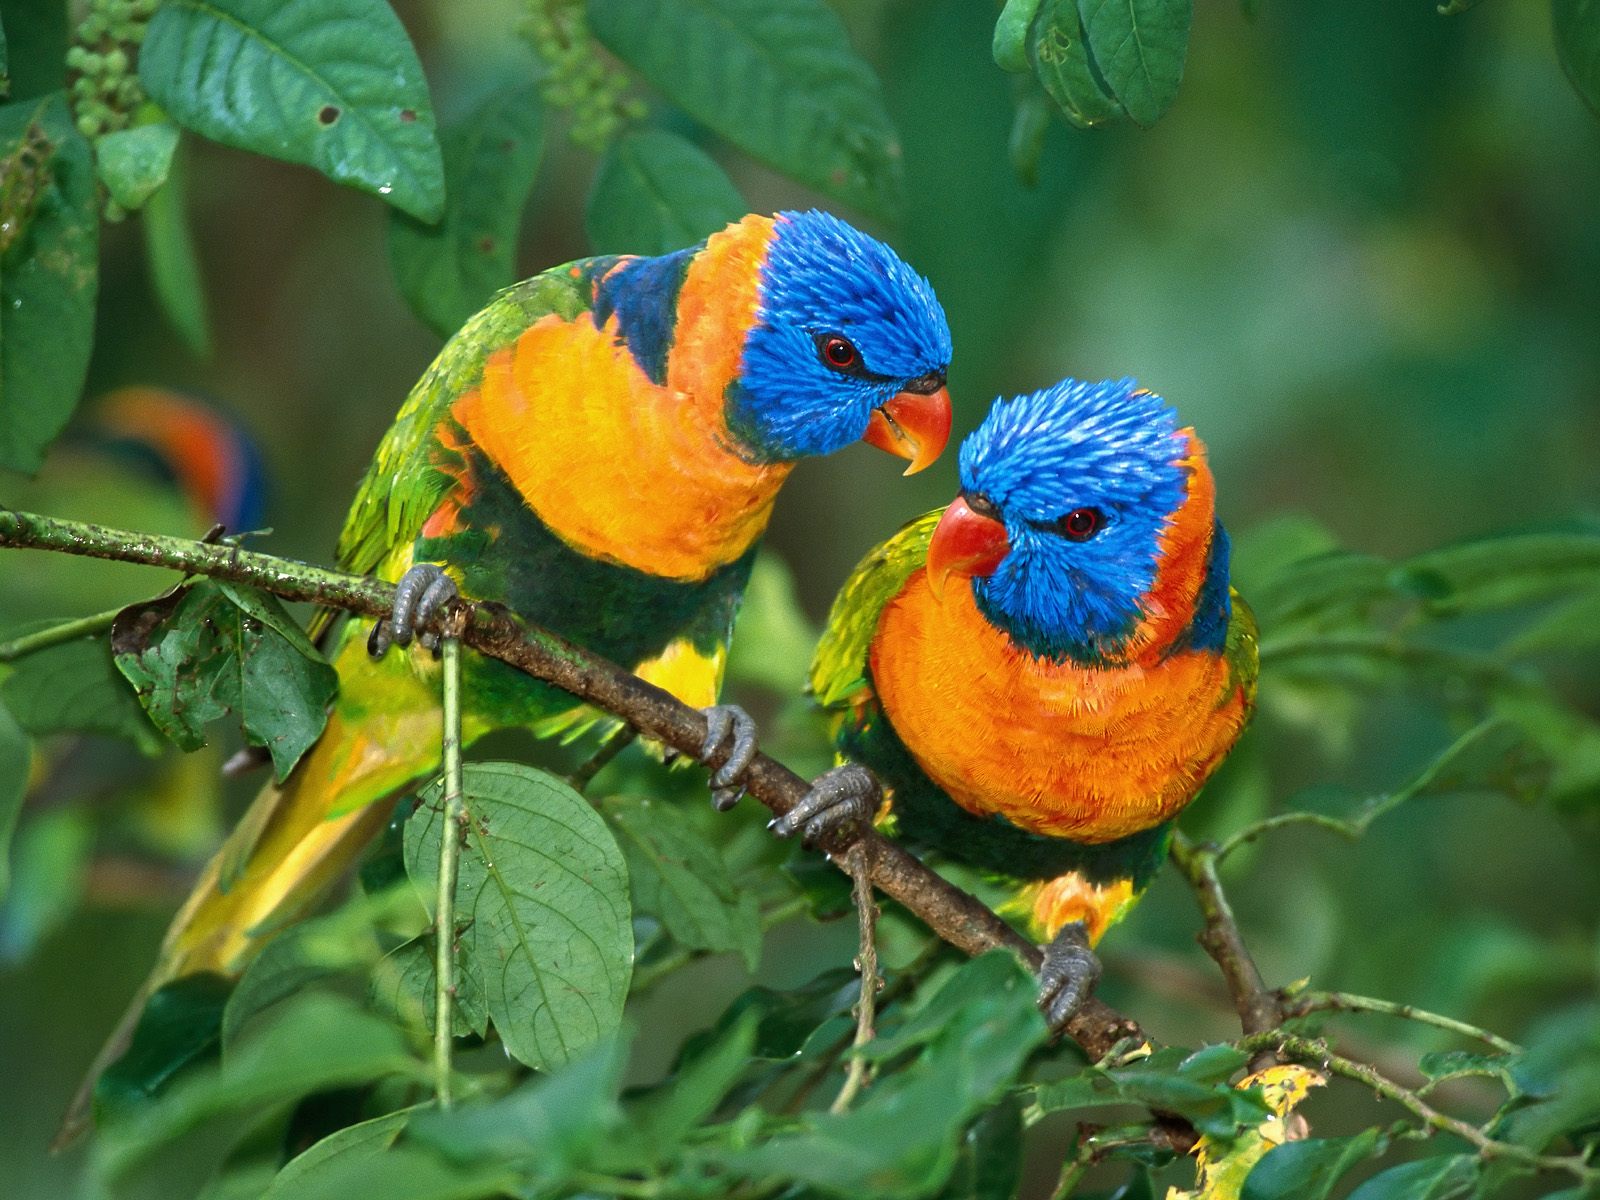 https://www.dazzlingwallpapers.com/wp-content/uploads/2014/09/cute-twin-birds-wallpaper.jpg